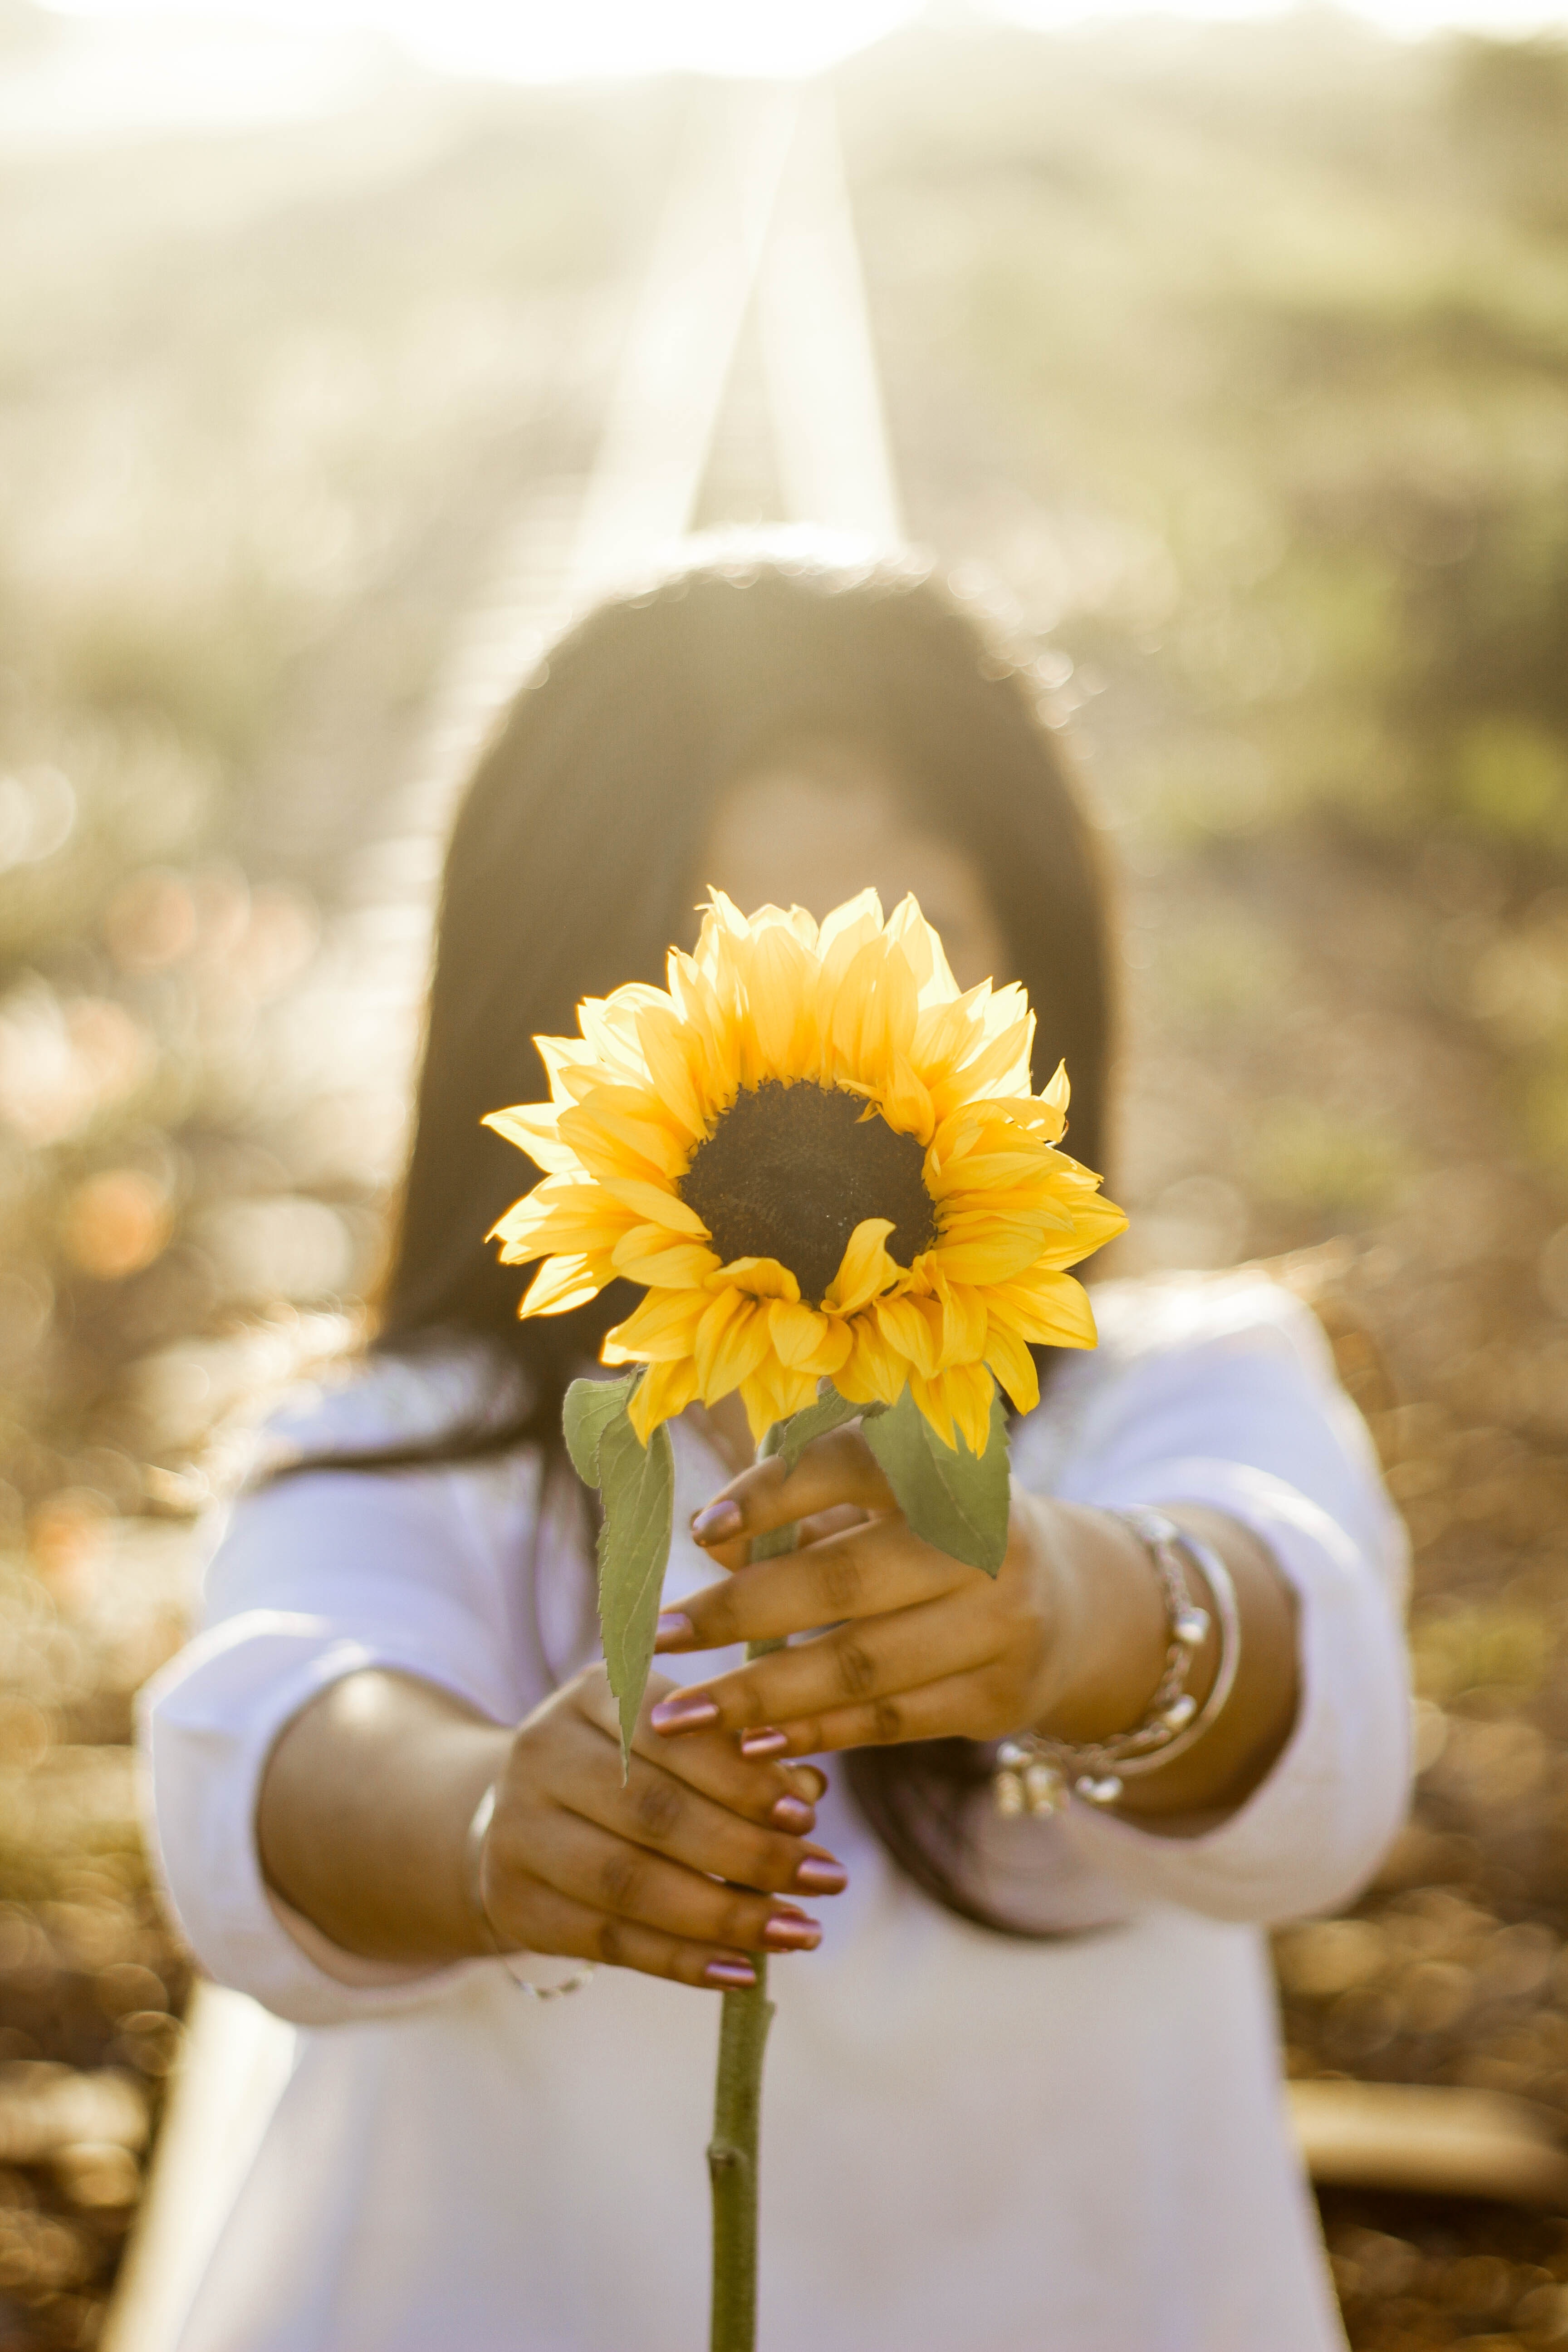 Frau hält Sonnenblume mit ausgestreckten Armen entgegen